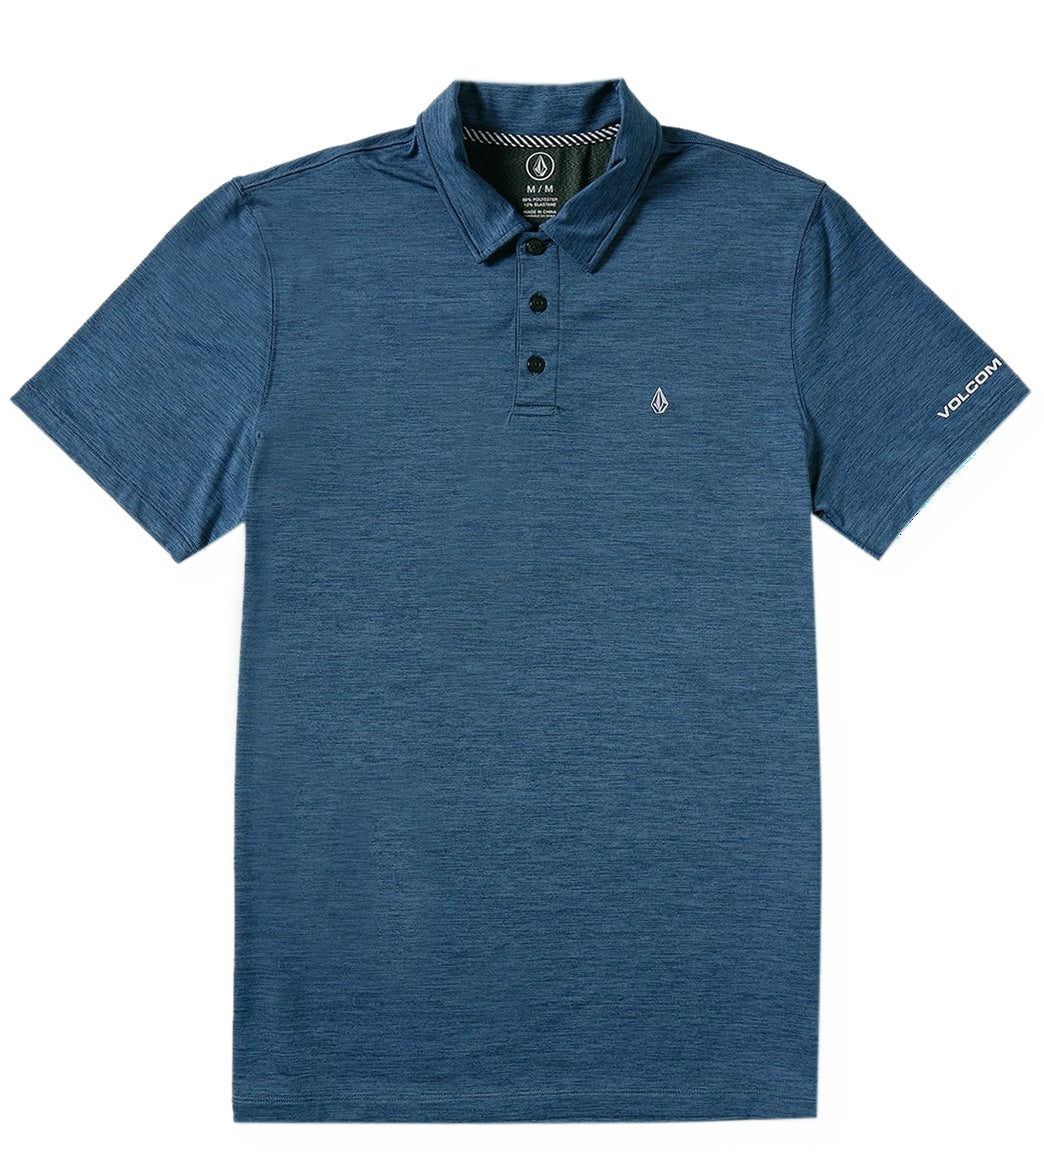 Volcom Men's Hazard Perf Short Sleeve Shirt Polo - Rinse Medium - Swimoutlet.com